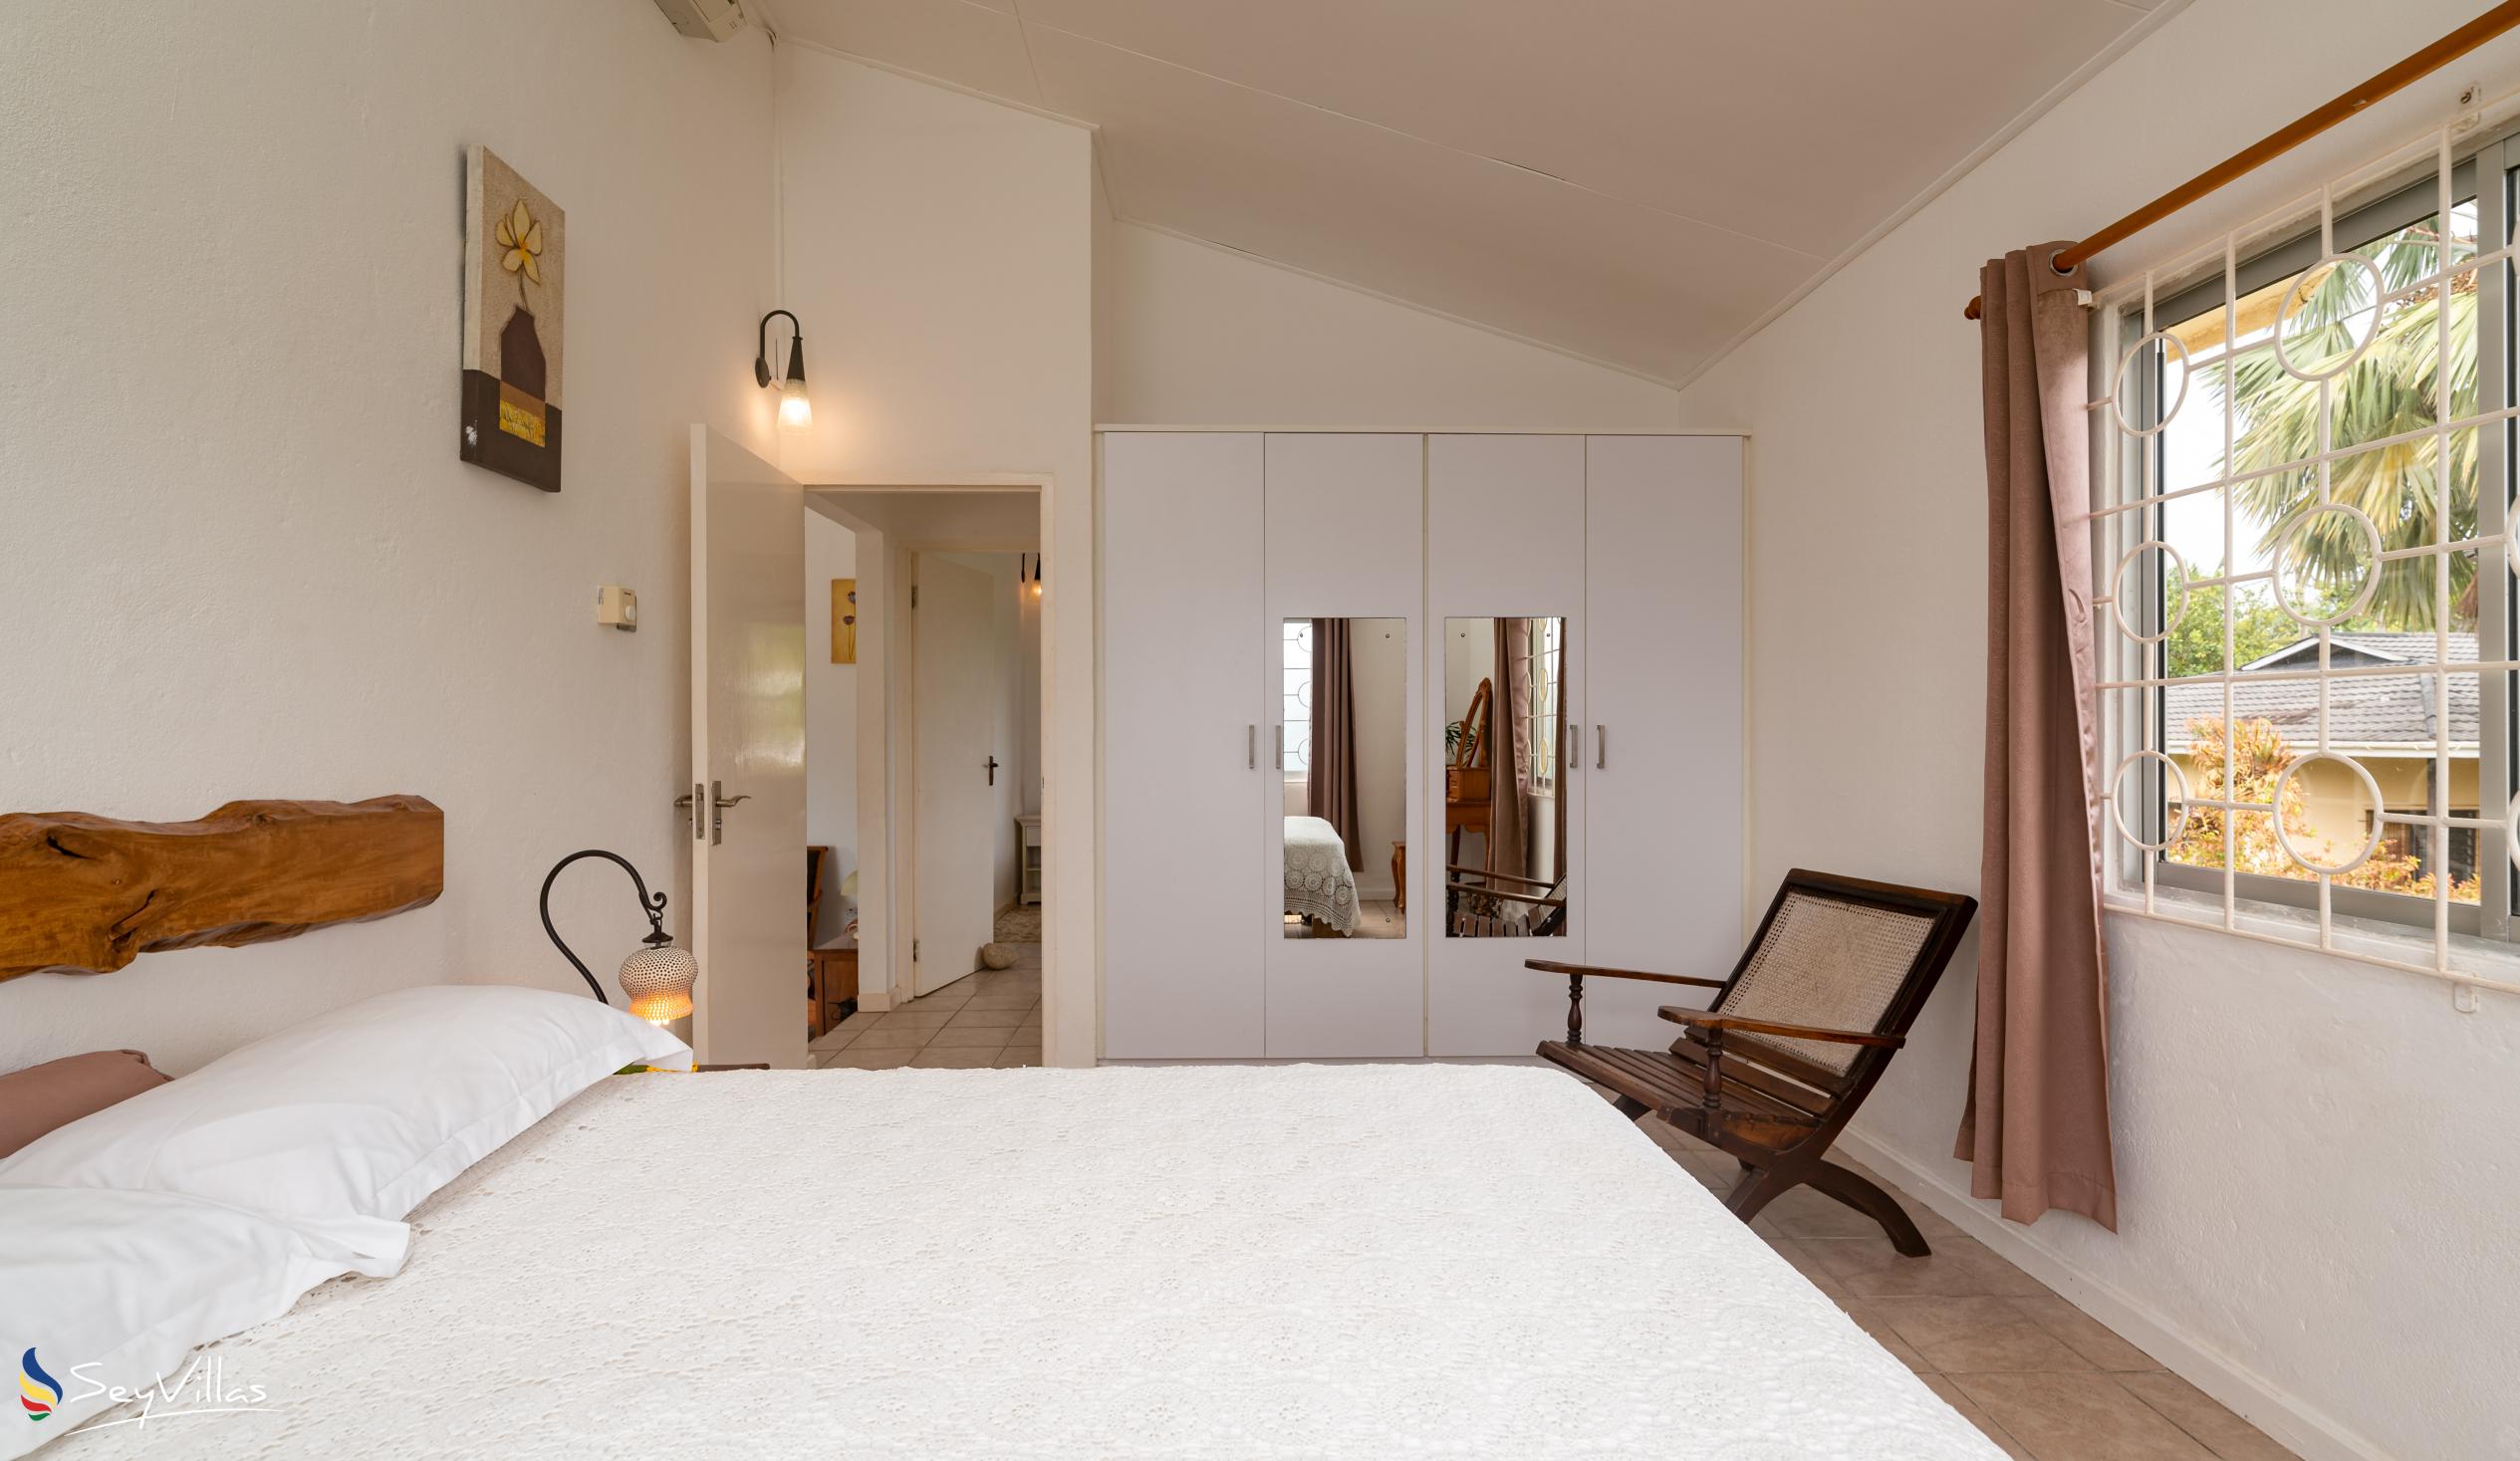 Photo 70: Residence Monte Cristo - 2-Bedroom Apartment - Mahé (Seychelles)